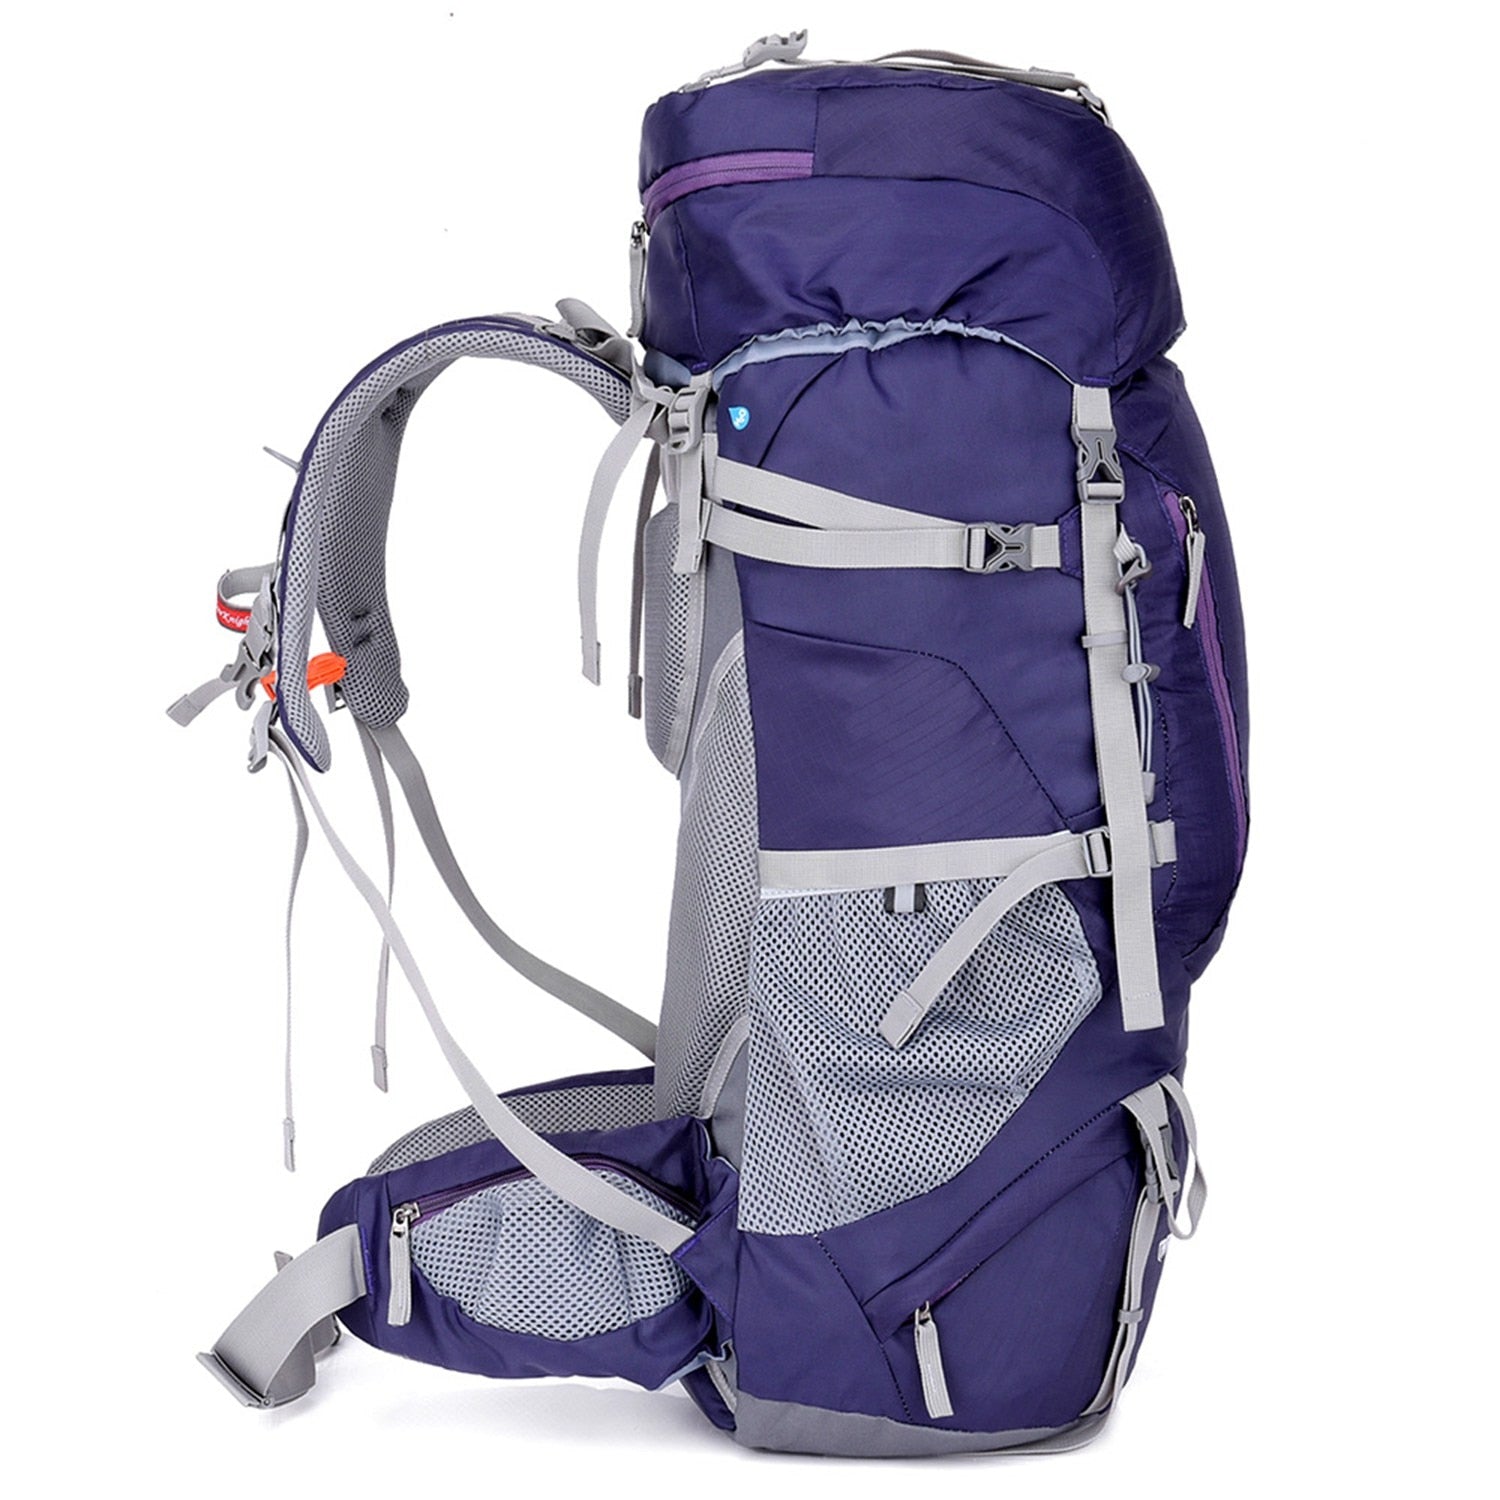 Free Knight 60L Waterproof Climbing Hiking Backpack Rain Cover Bags Camping Mountaineering Backpacks Sport Outdoor Bike B - ebowsos